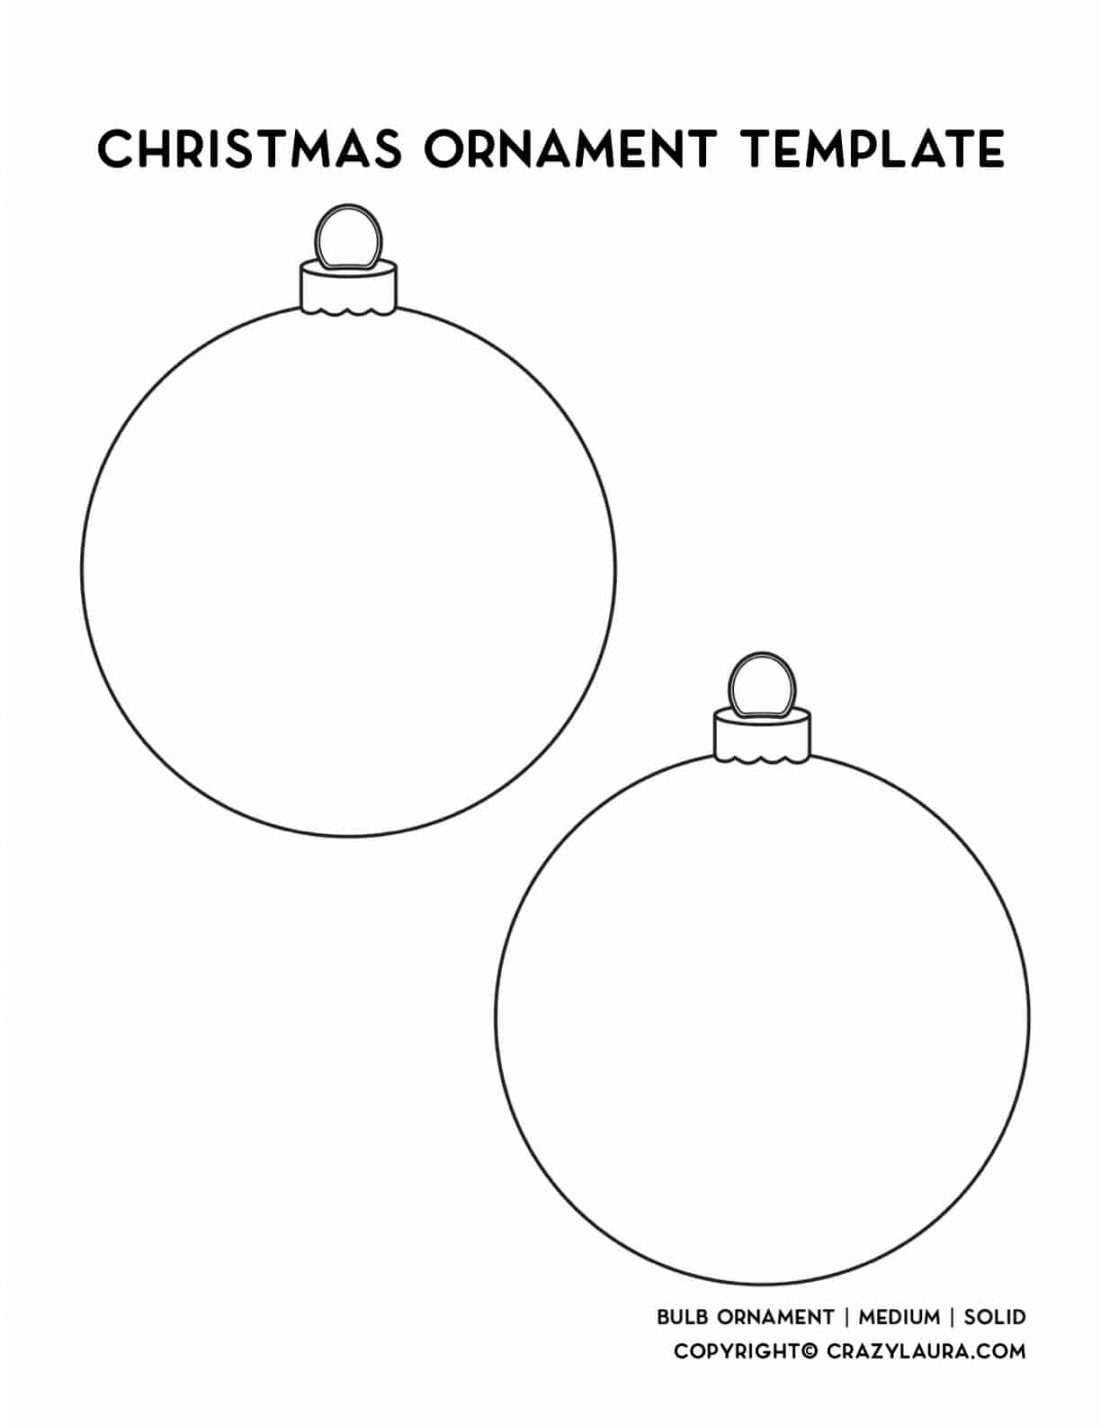 Free Christmas Ornament Template Printables & Outlines - Crazy Laura - FREE Printables - Printable Christmas Ornament Templates